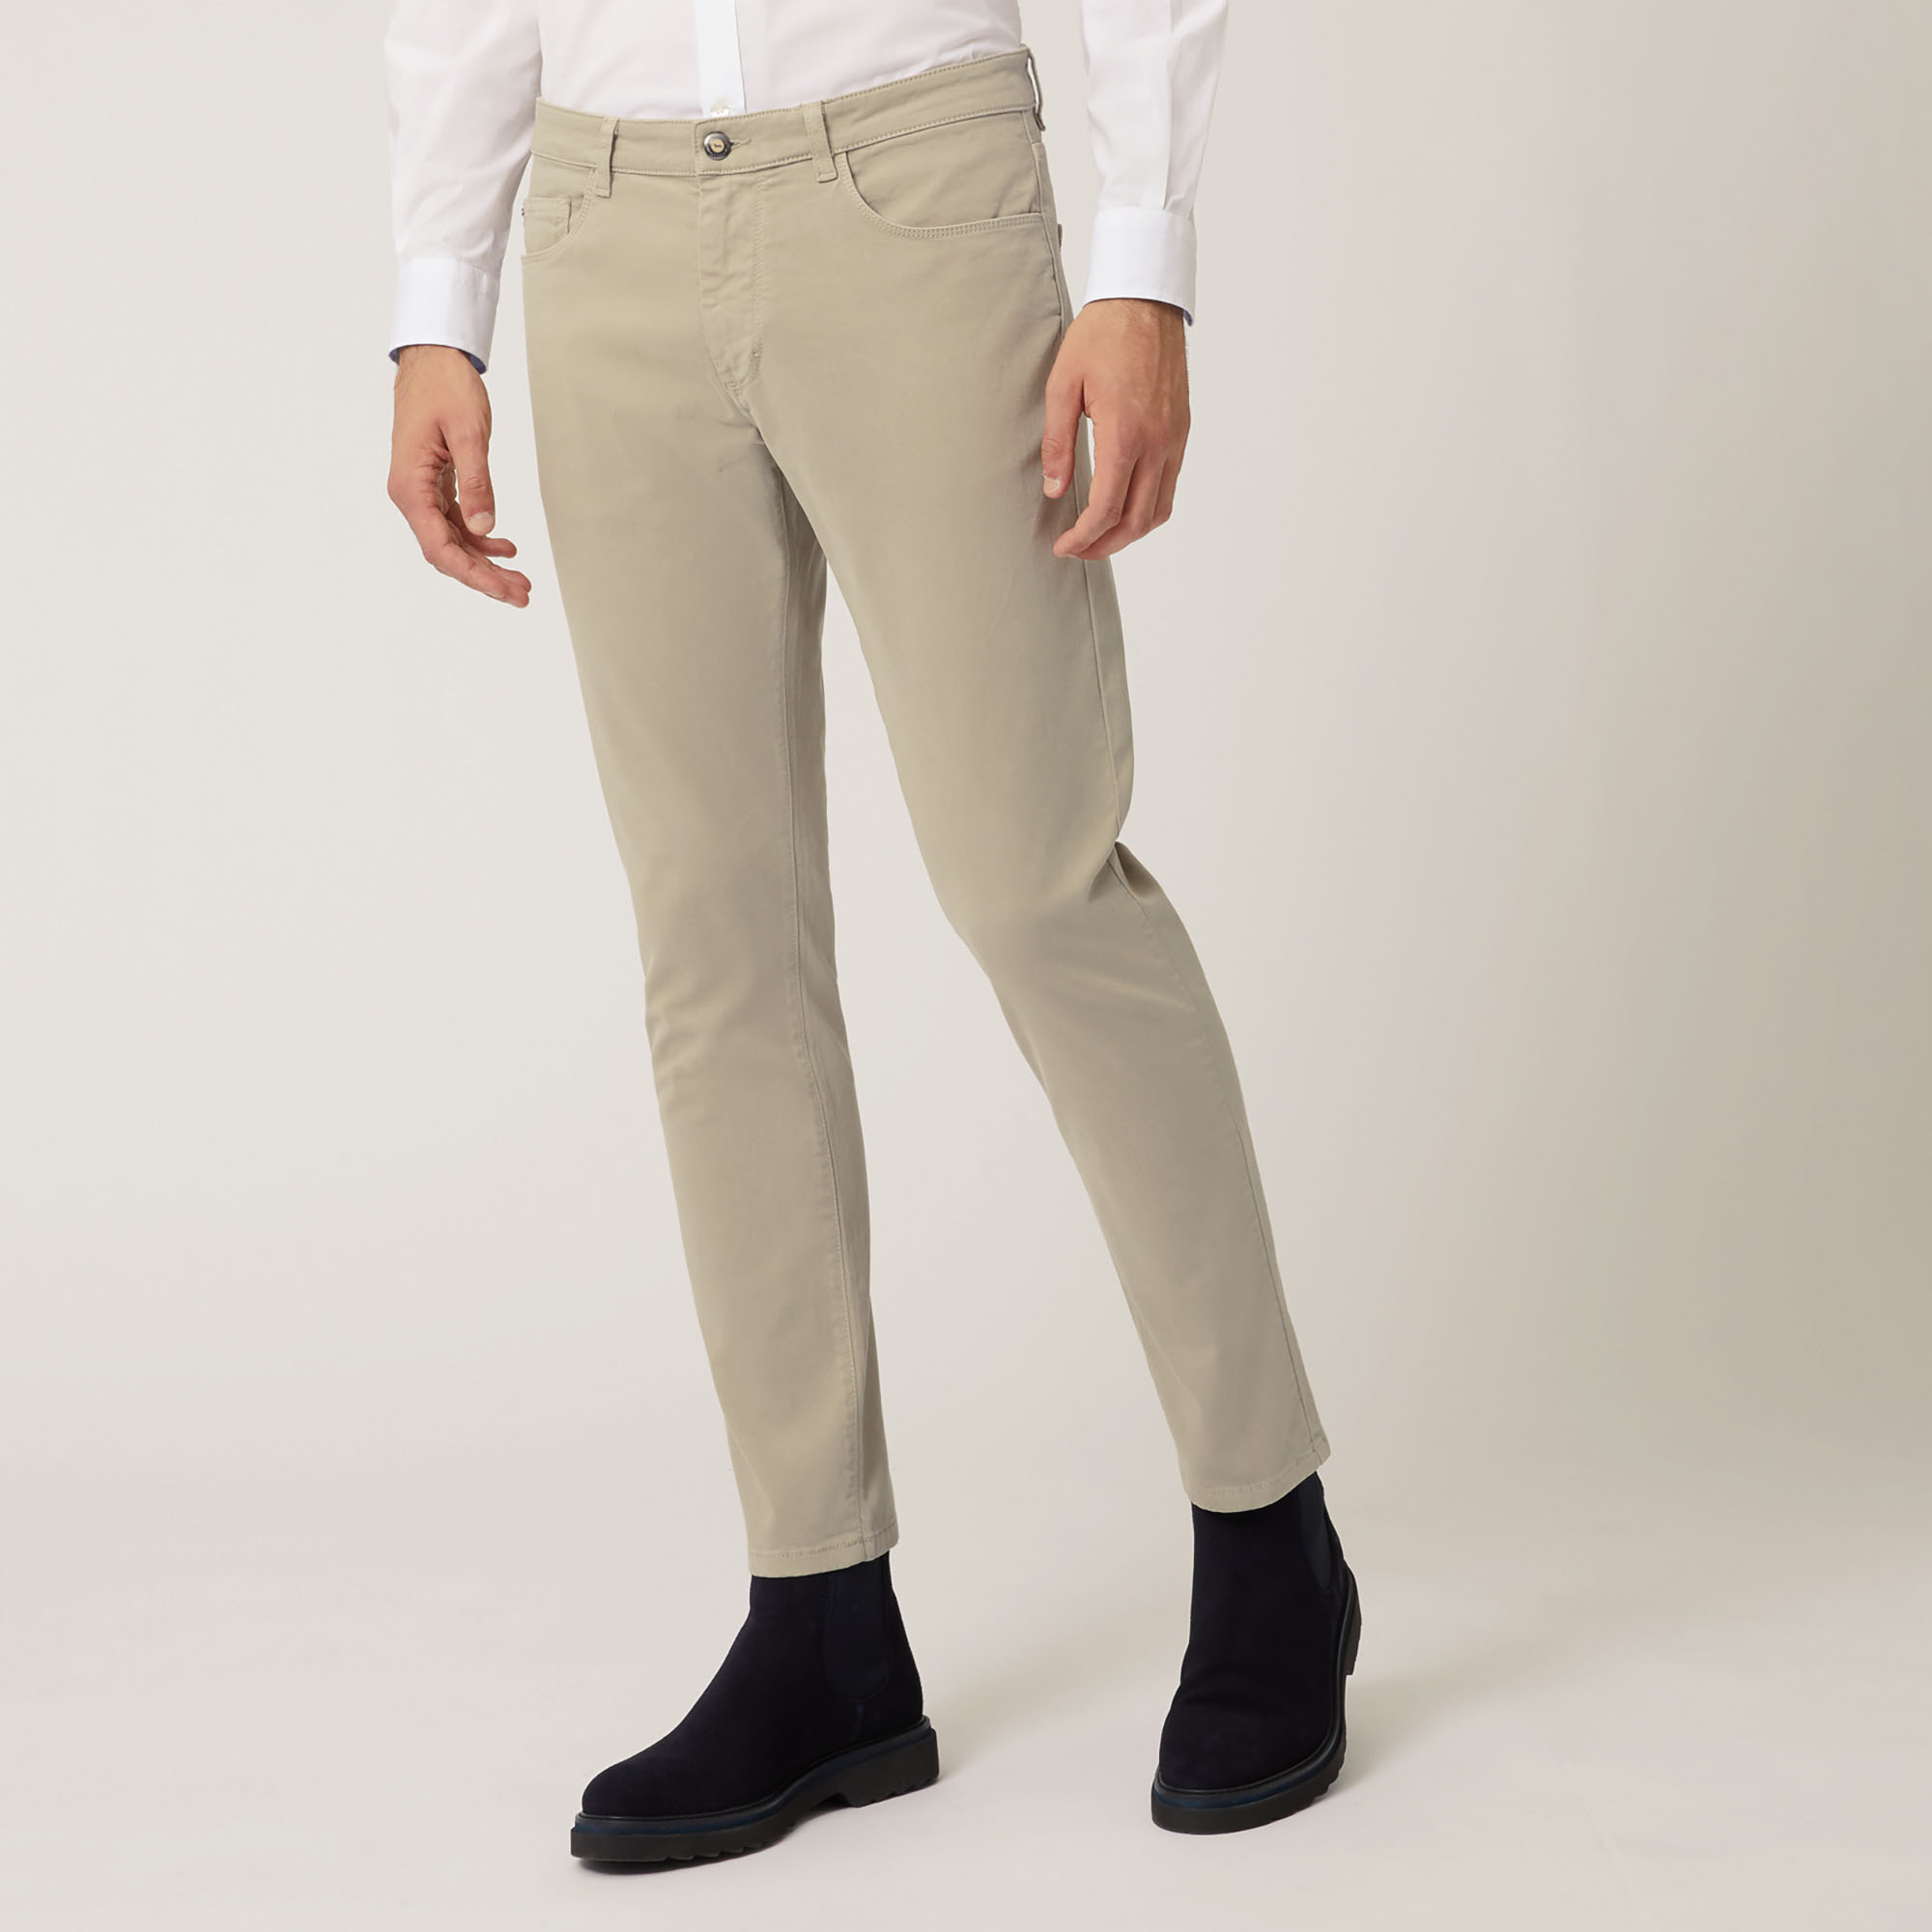 Pantalone Cinque Tasche Slim Fit, Beige, large